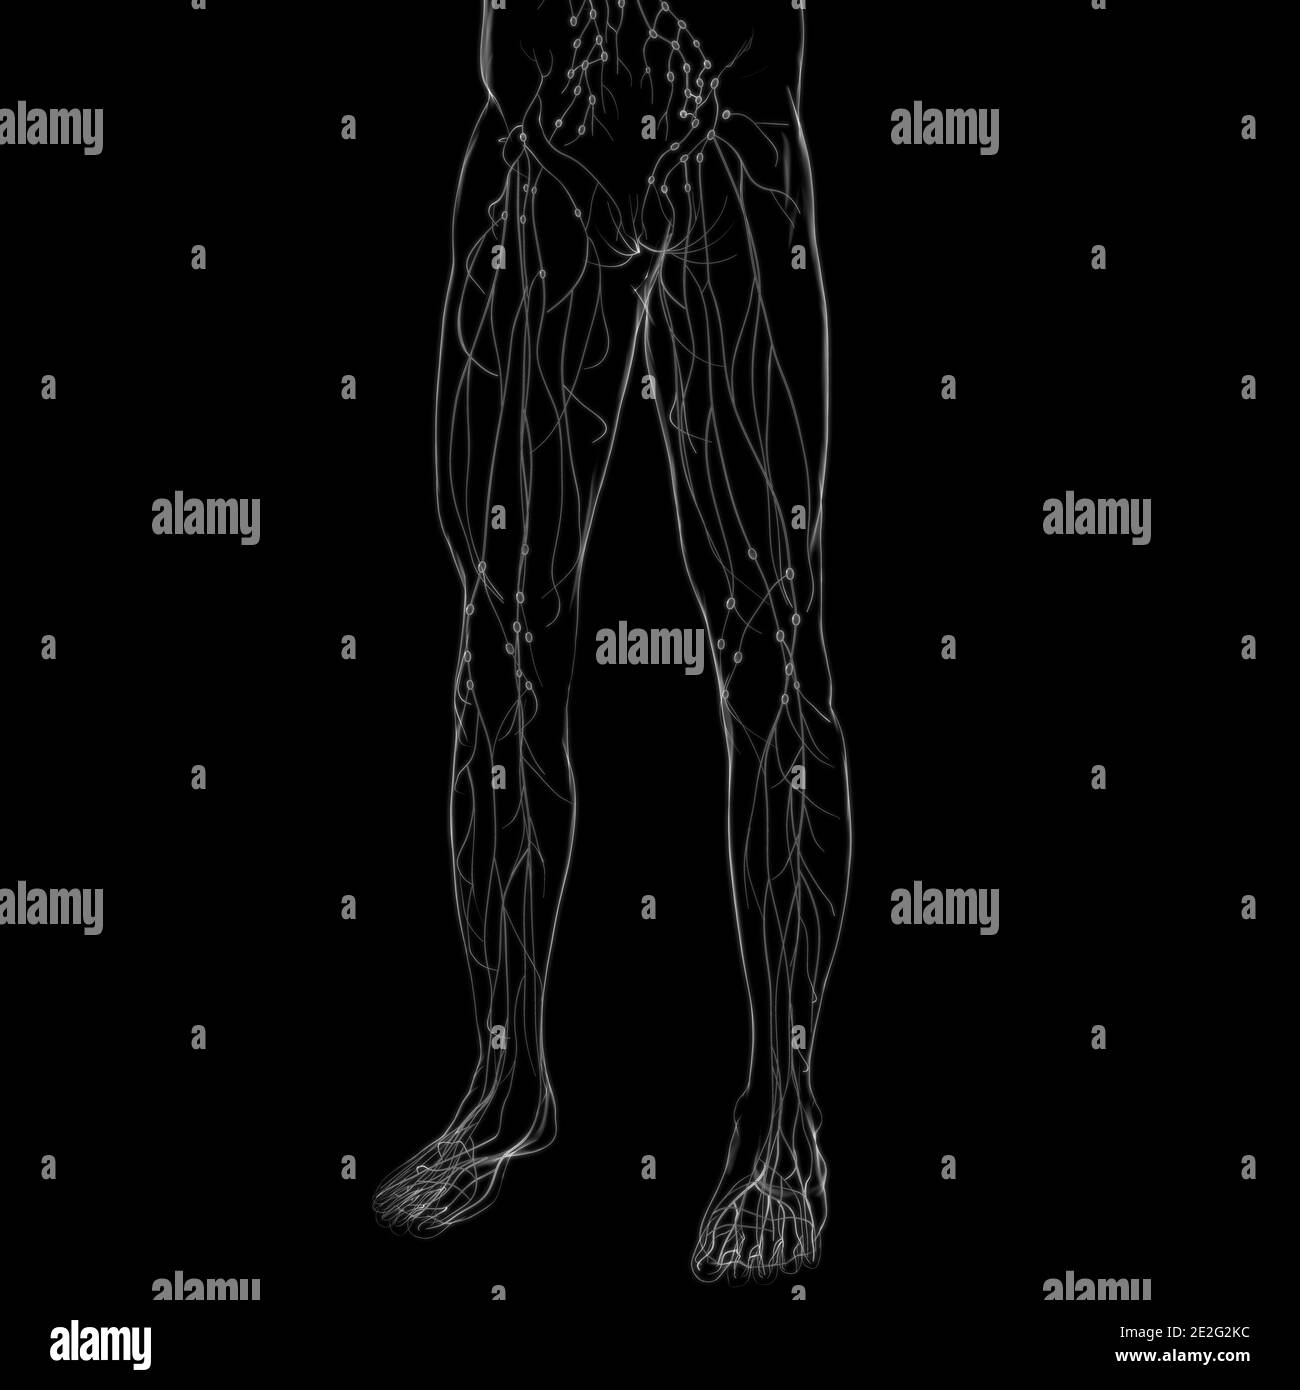 Human lymphe Nodes Anatomy for Medical concept 3D Illustration Banque D'Images